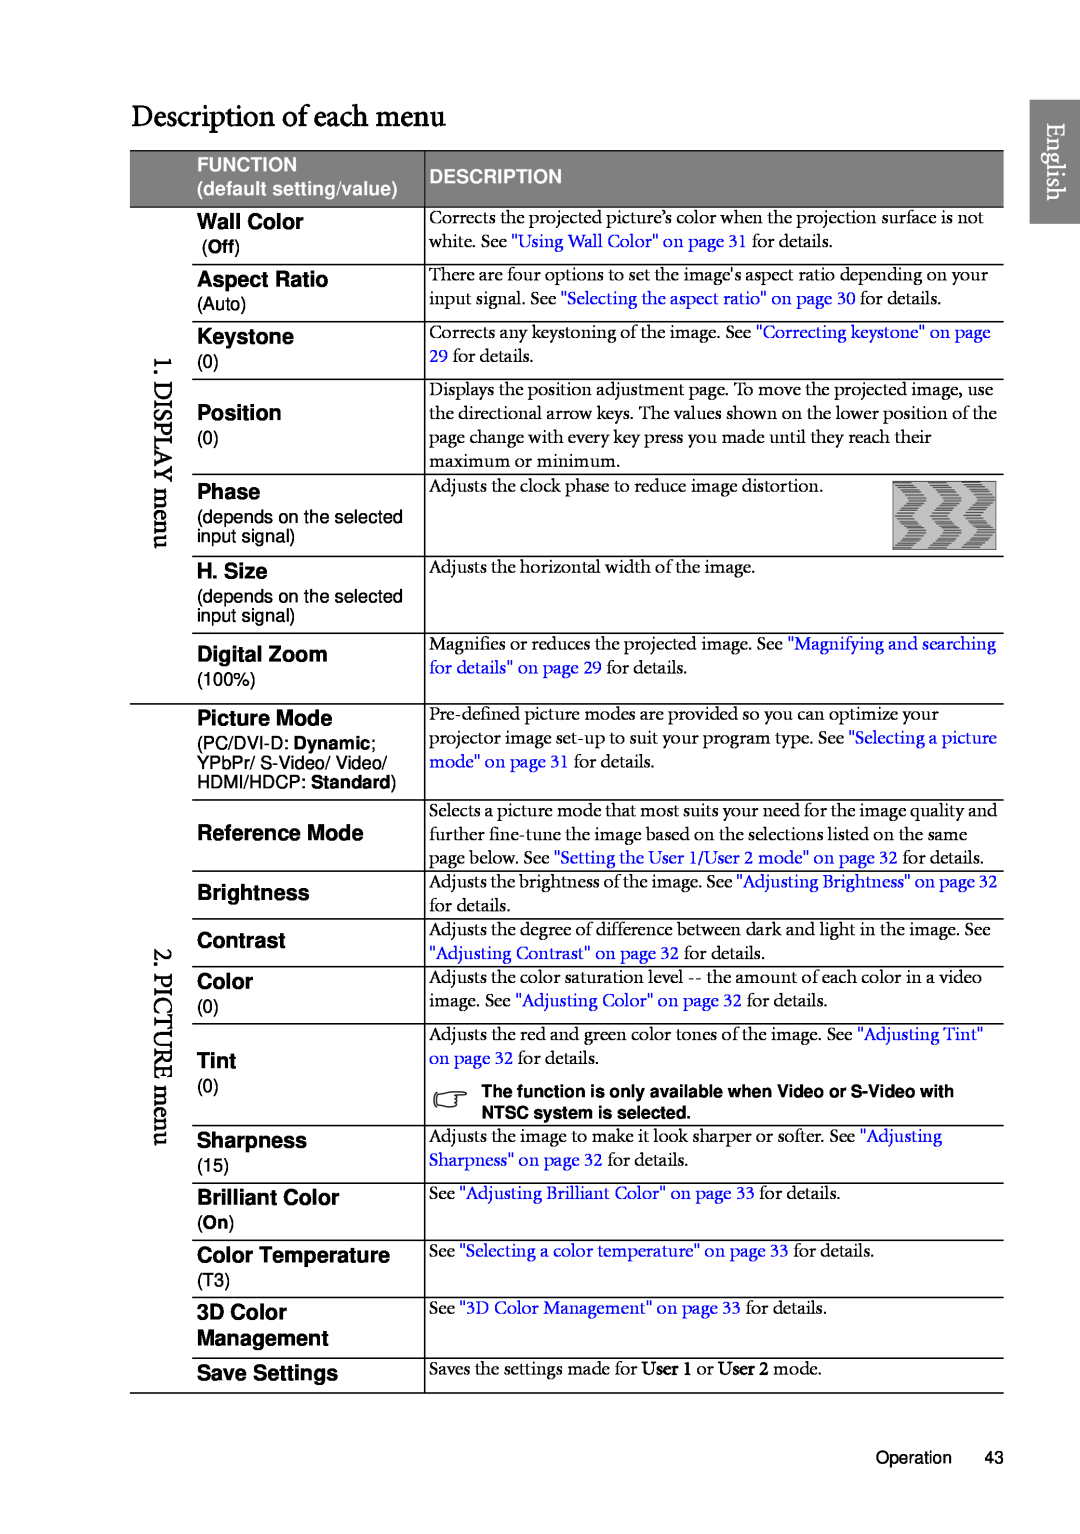 BenQ SP920 user manual Description of each menu, English, Function, default setting/value 